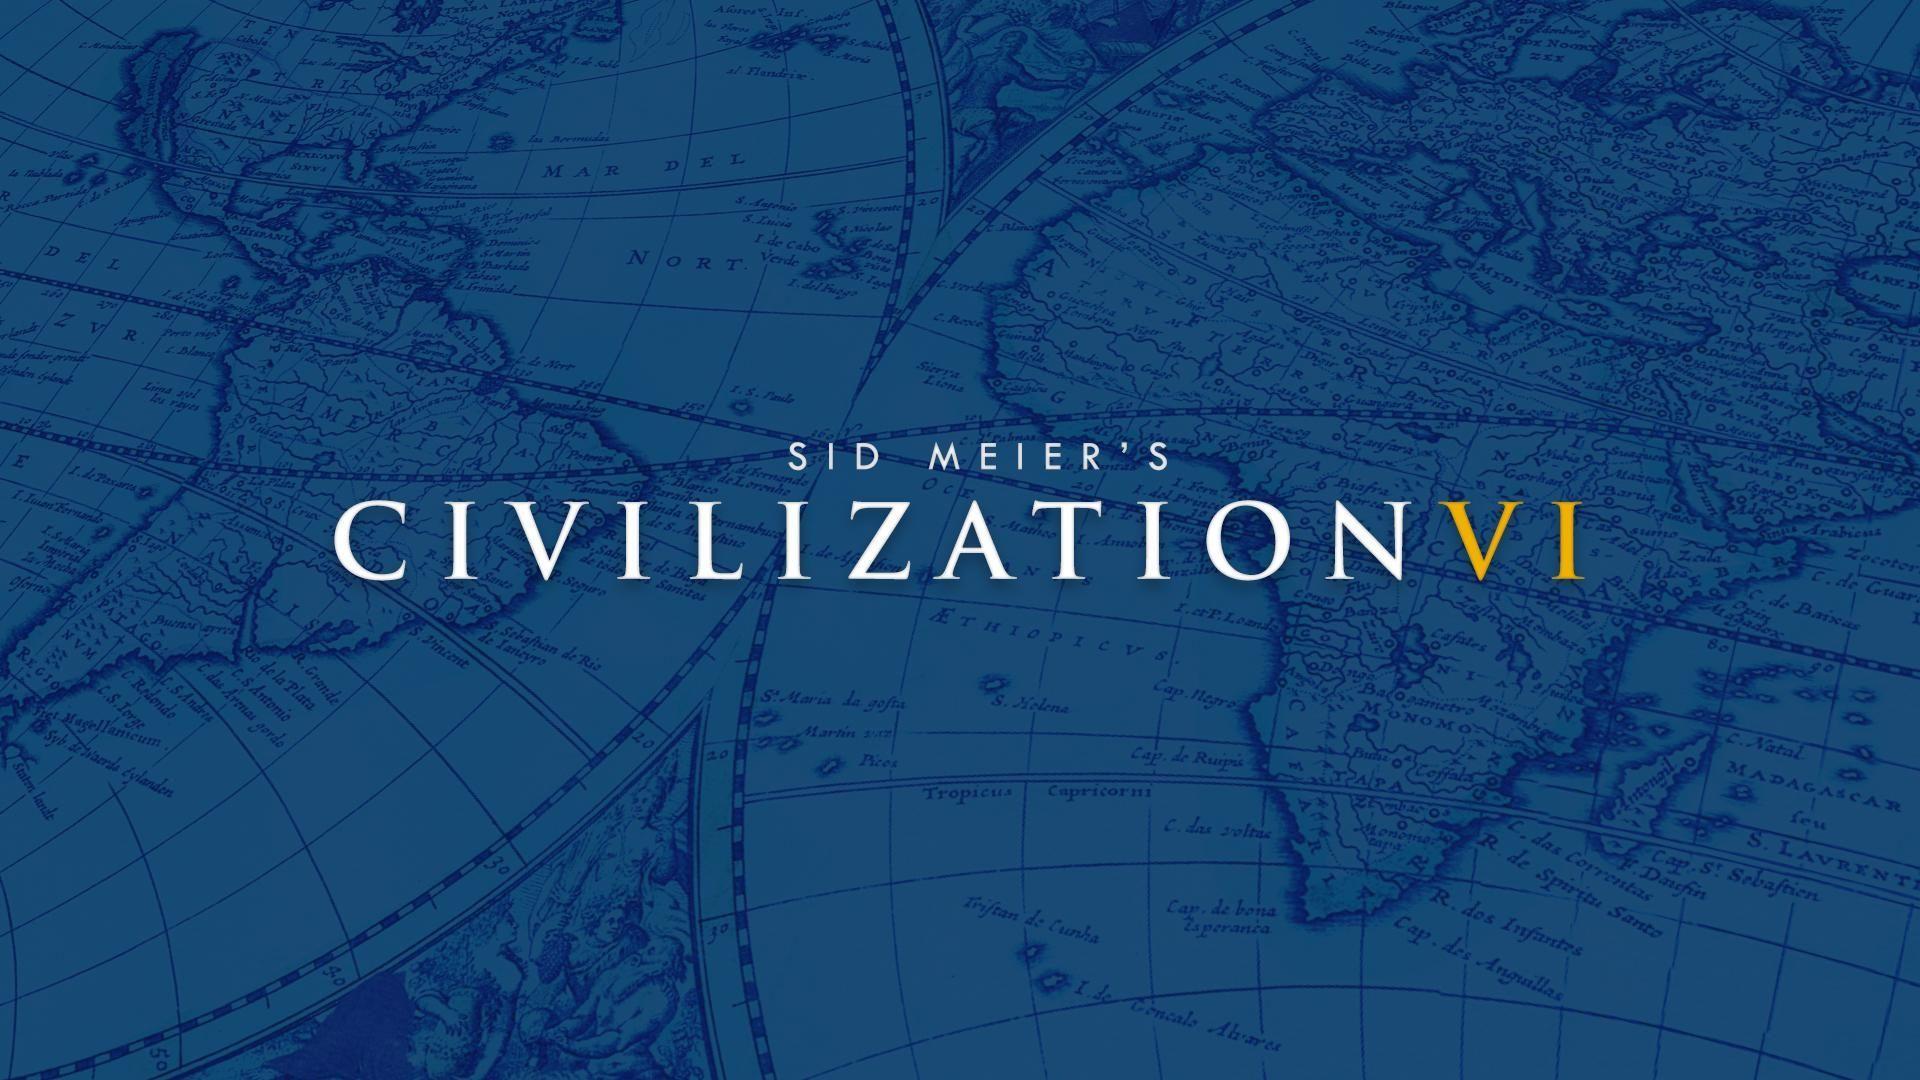 Civilization VI wallpaper a recreation attempt of the title screen